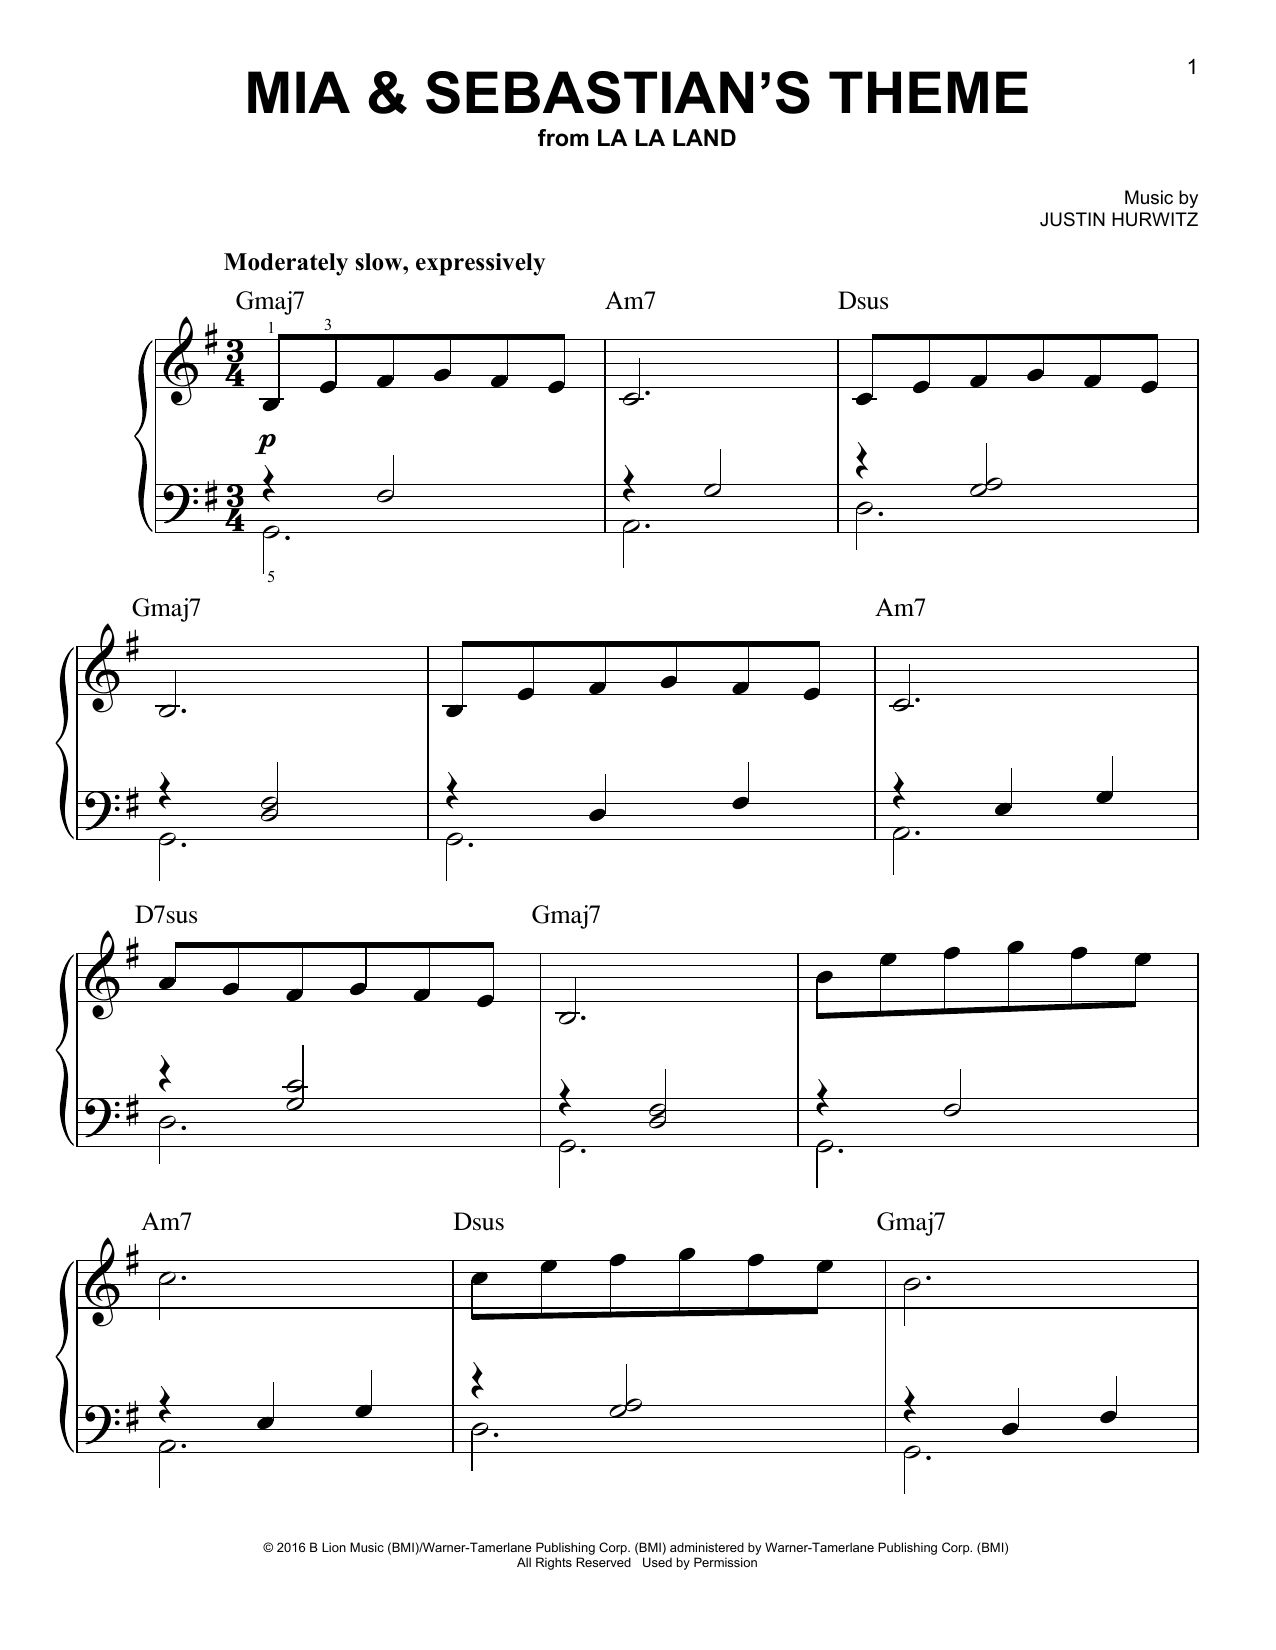 Justin Hurwitz Mia & Sebastian's Theme (from La La Land) Sheet Music Notes & Chords for VLNDT - Download or Print PDF